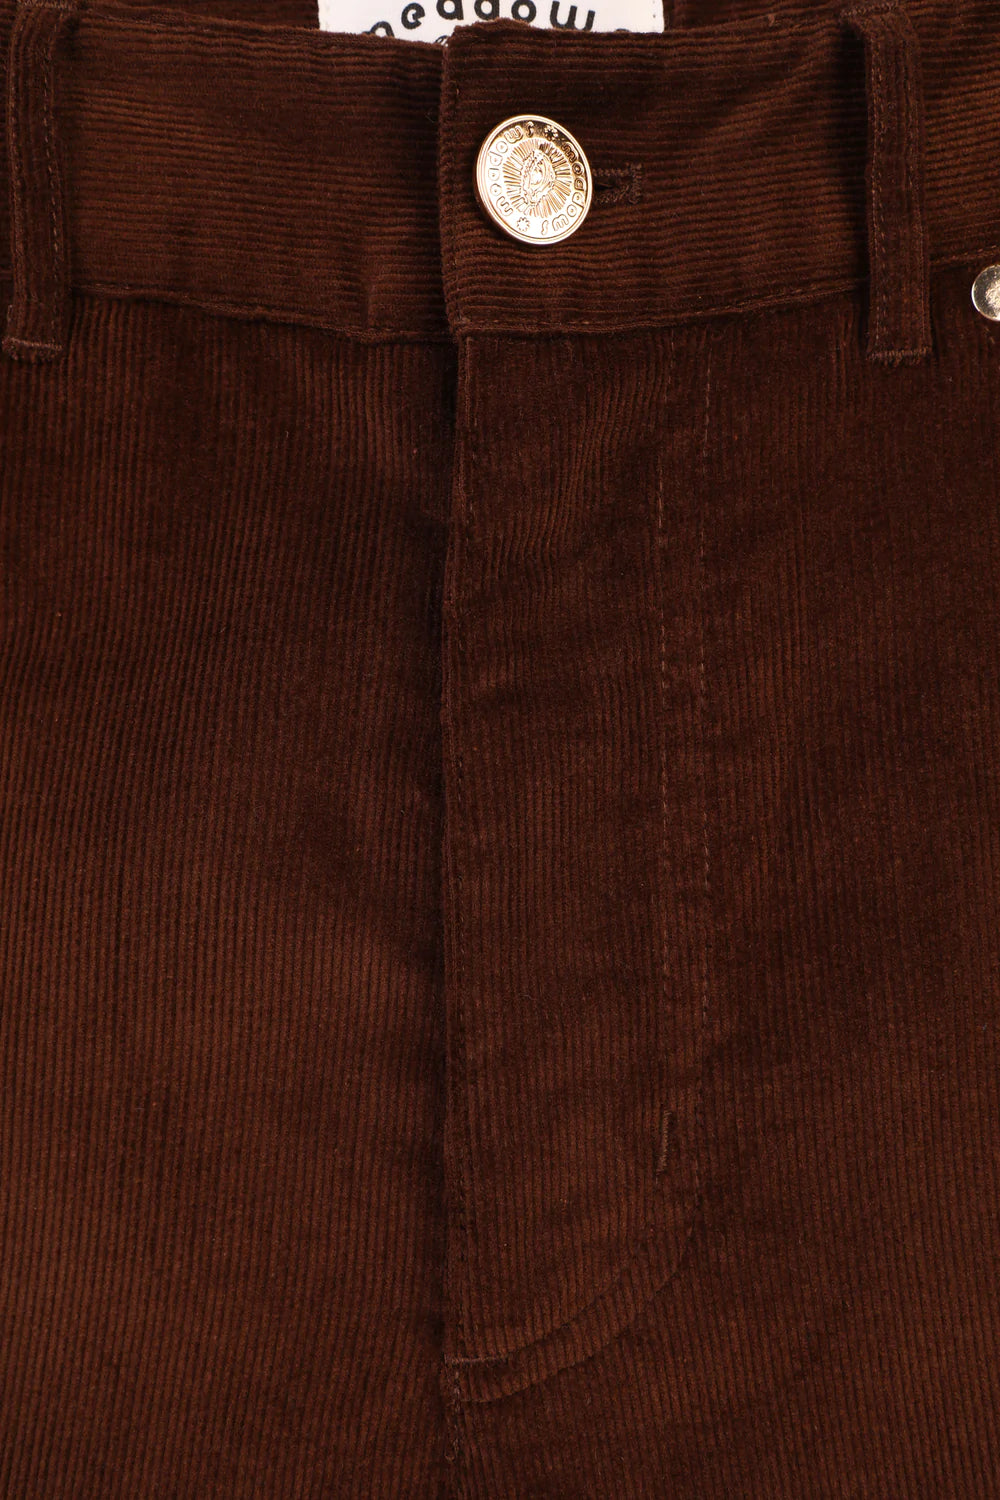 Meadows Heather Trousers brown-Meadows brown corduroy pants-Idun-St. Paul